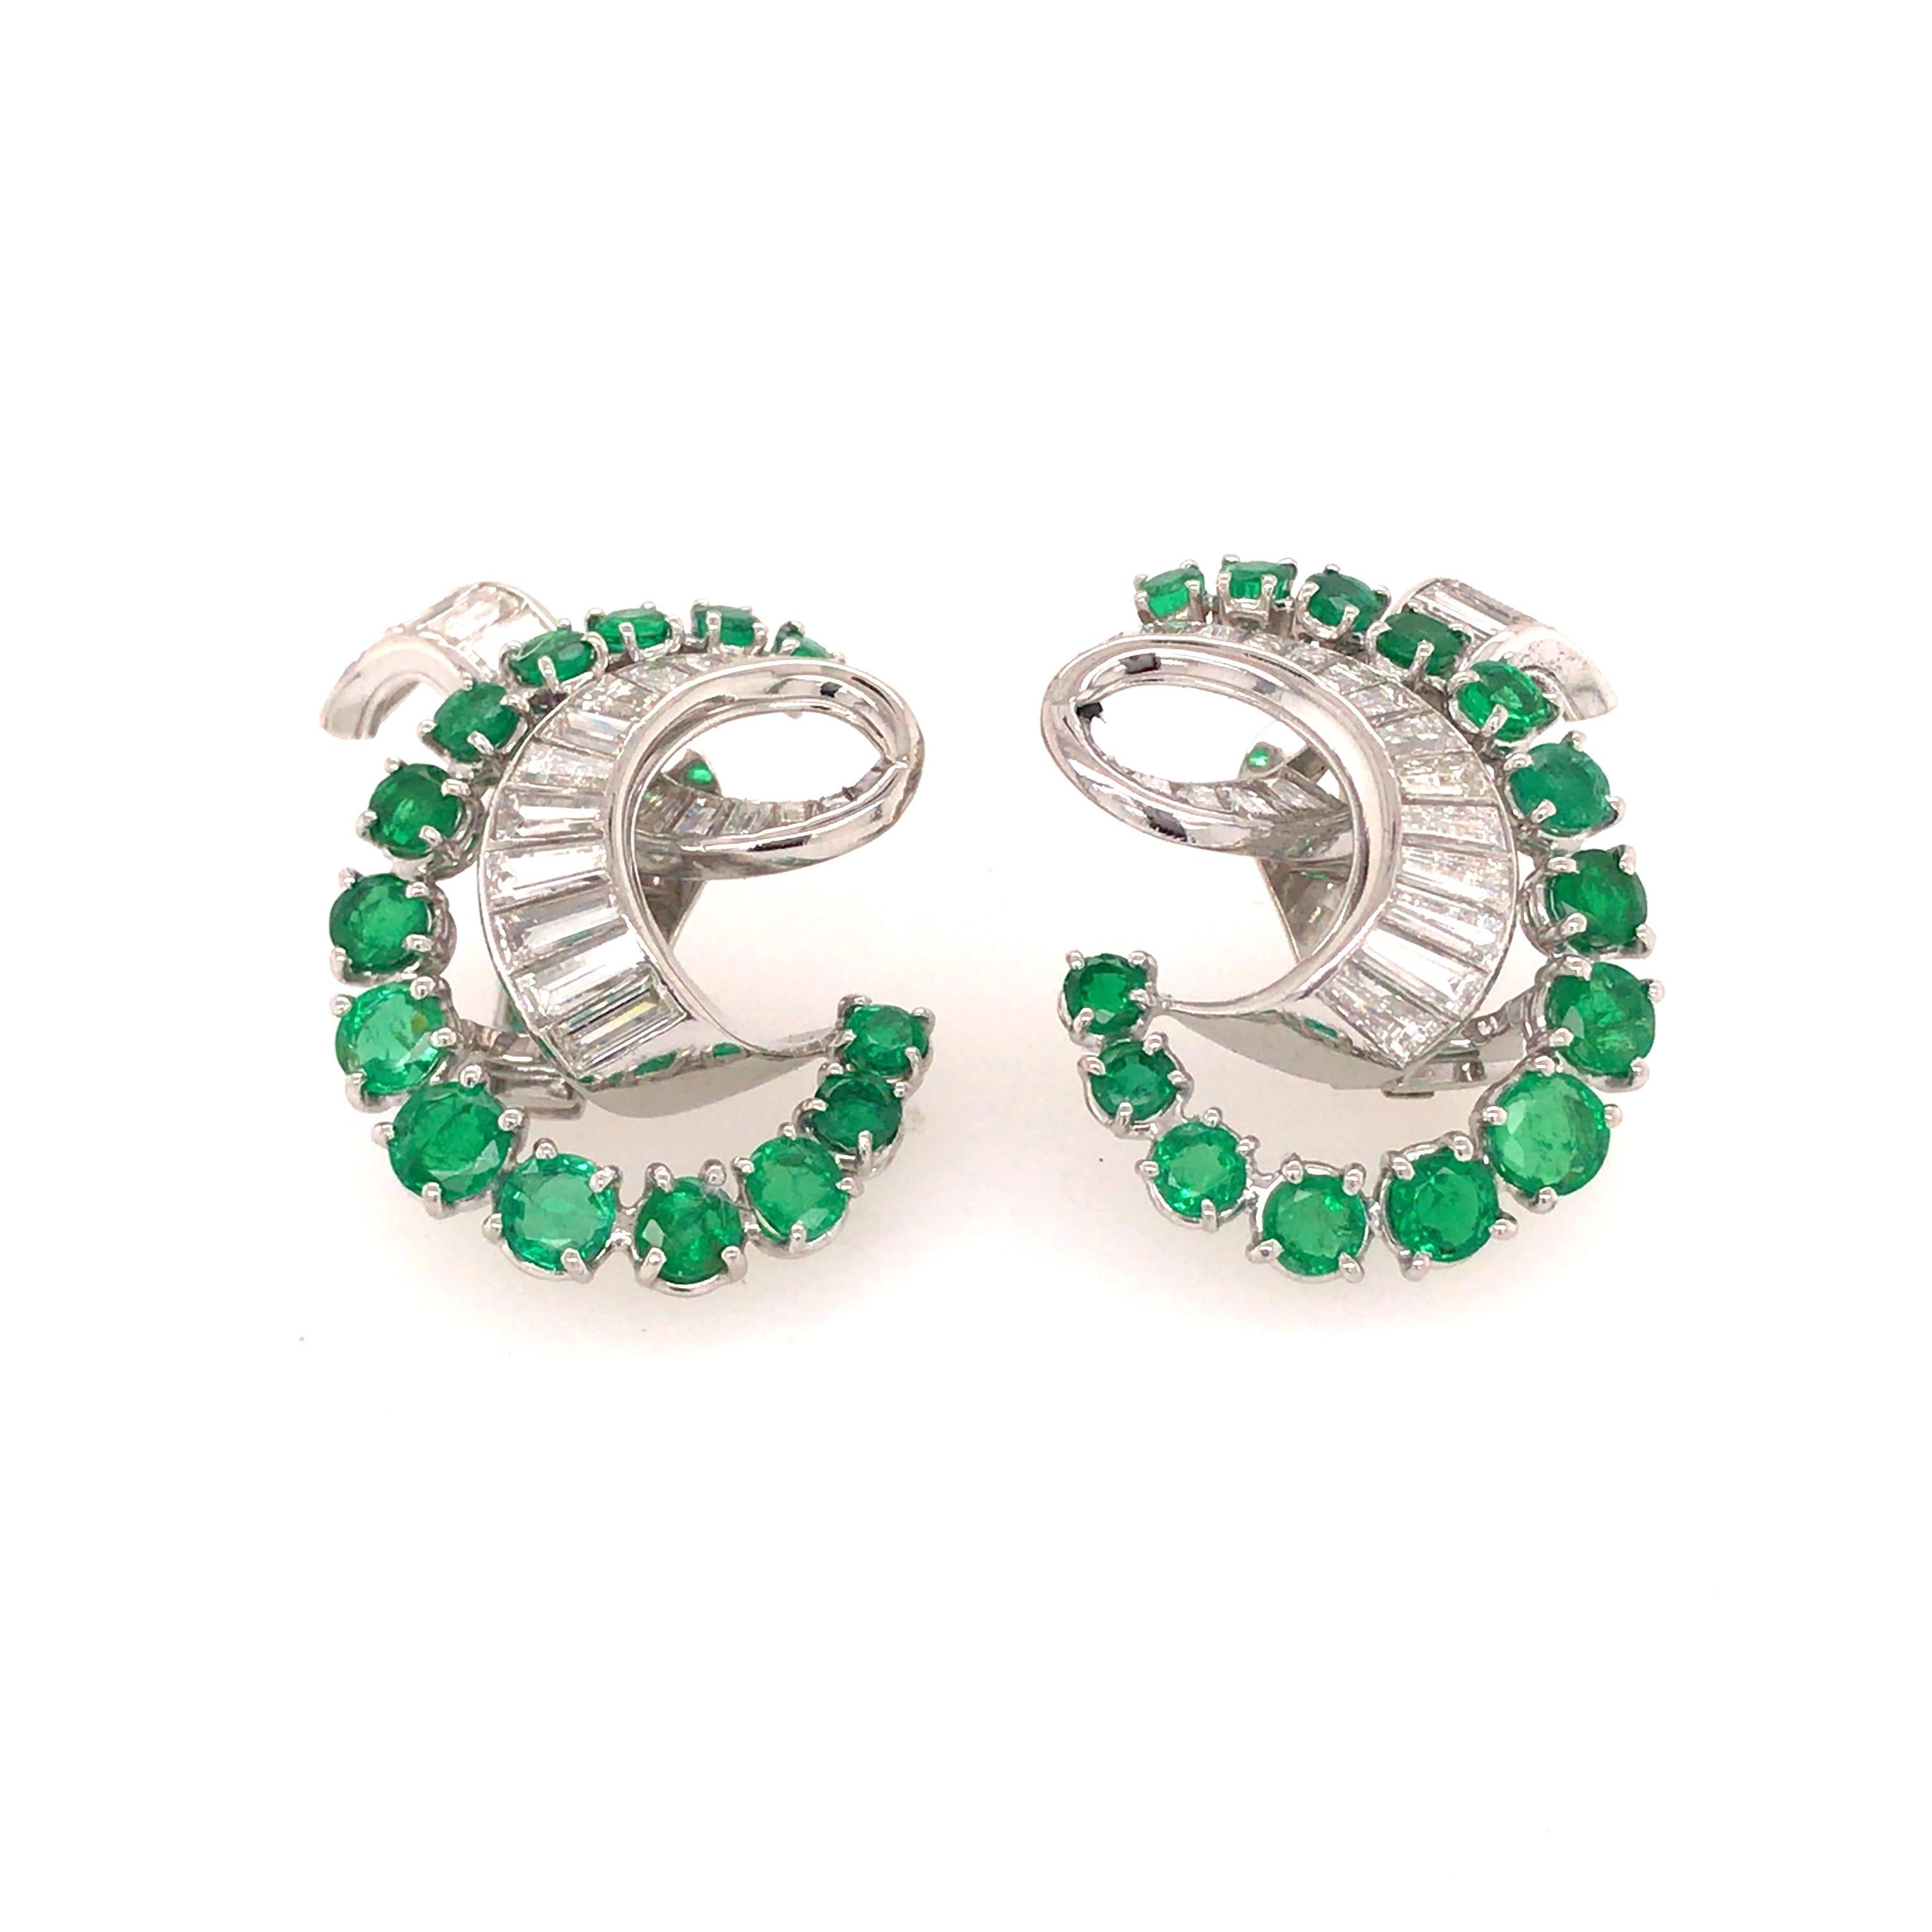 Baguette Cut Platinum Art Deco Style Diamond and Emerald Earrings